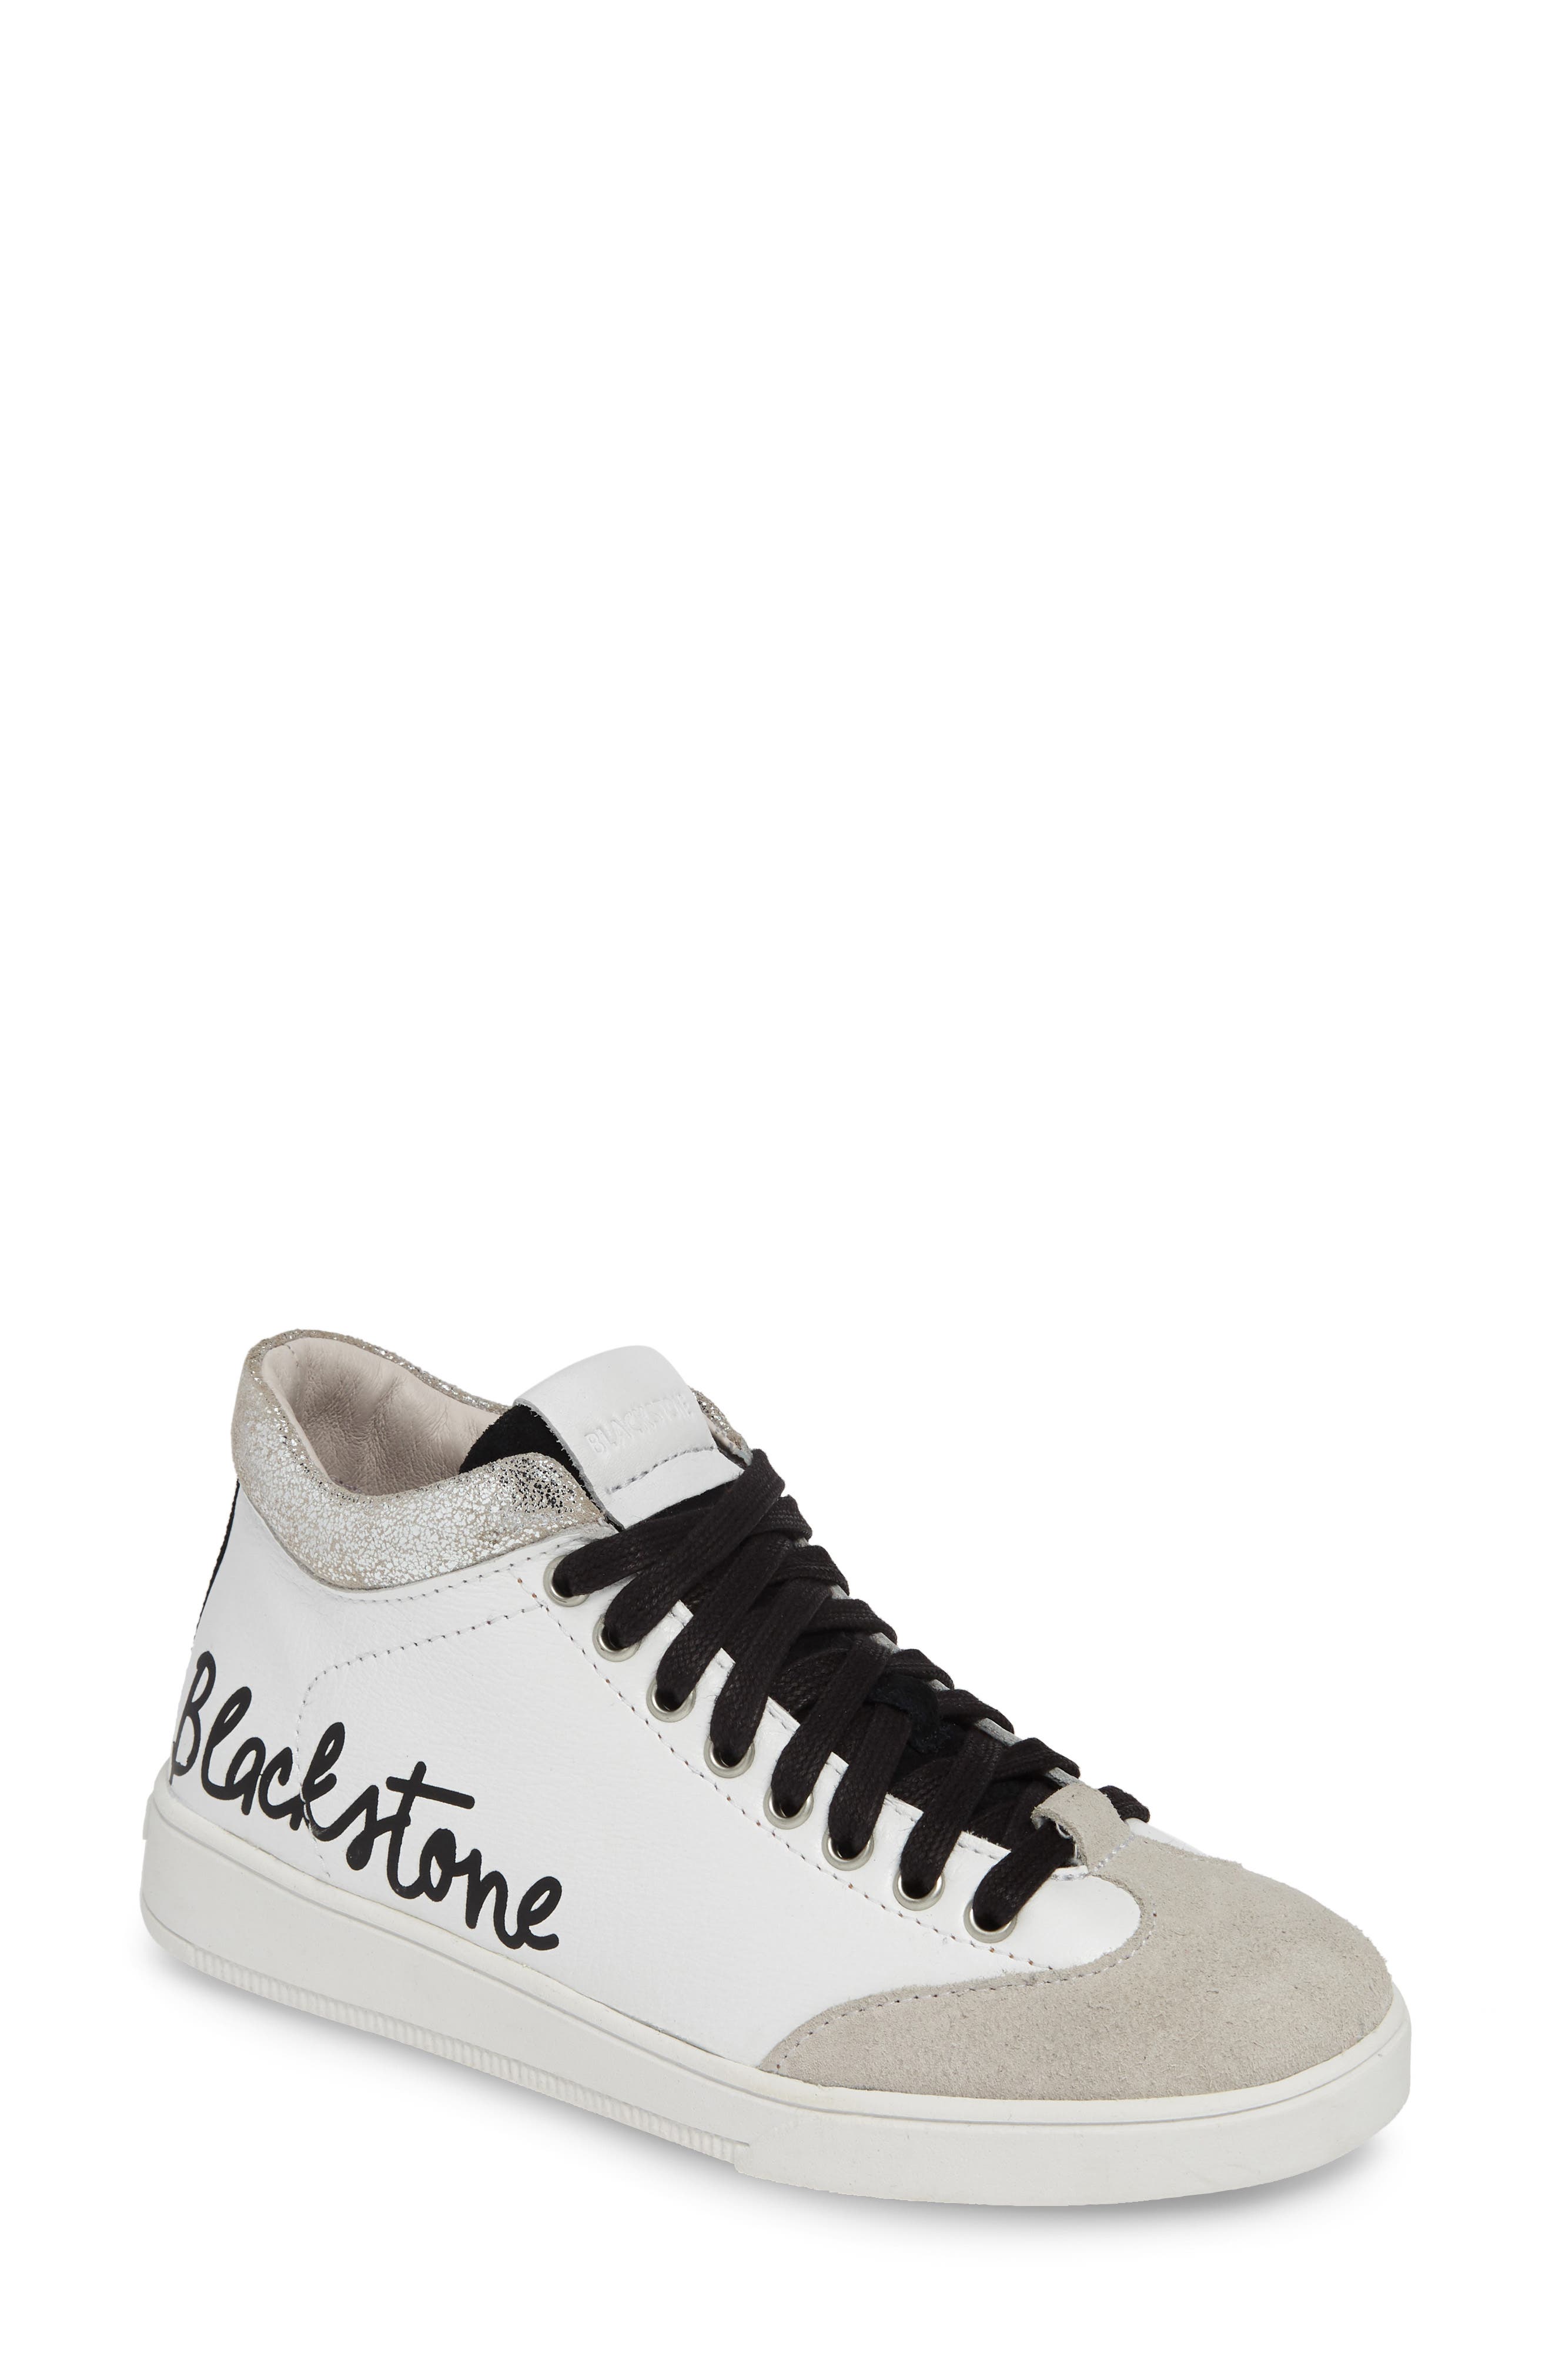 sneakers blackstone